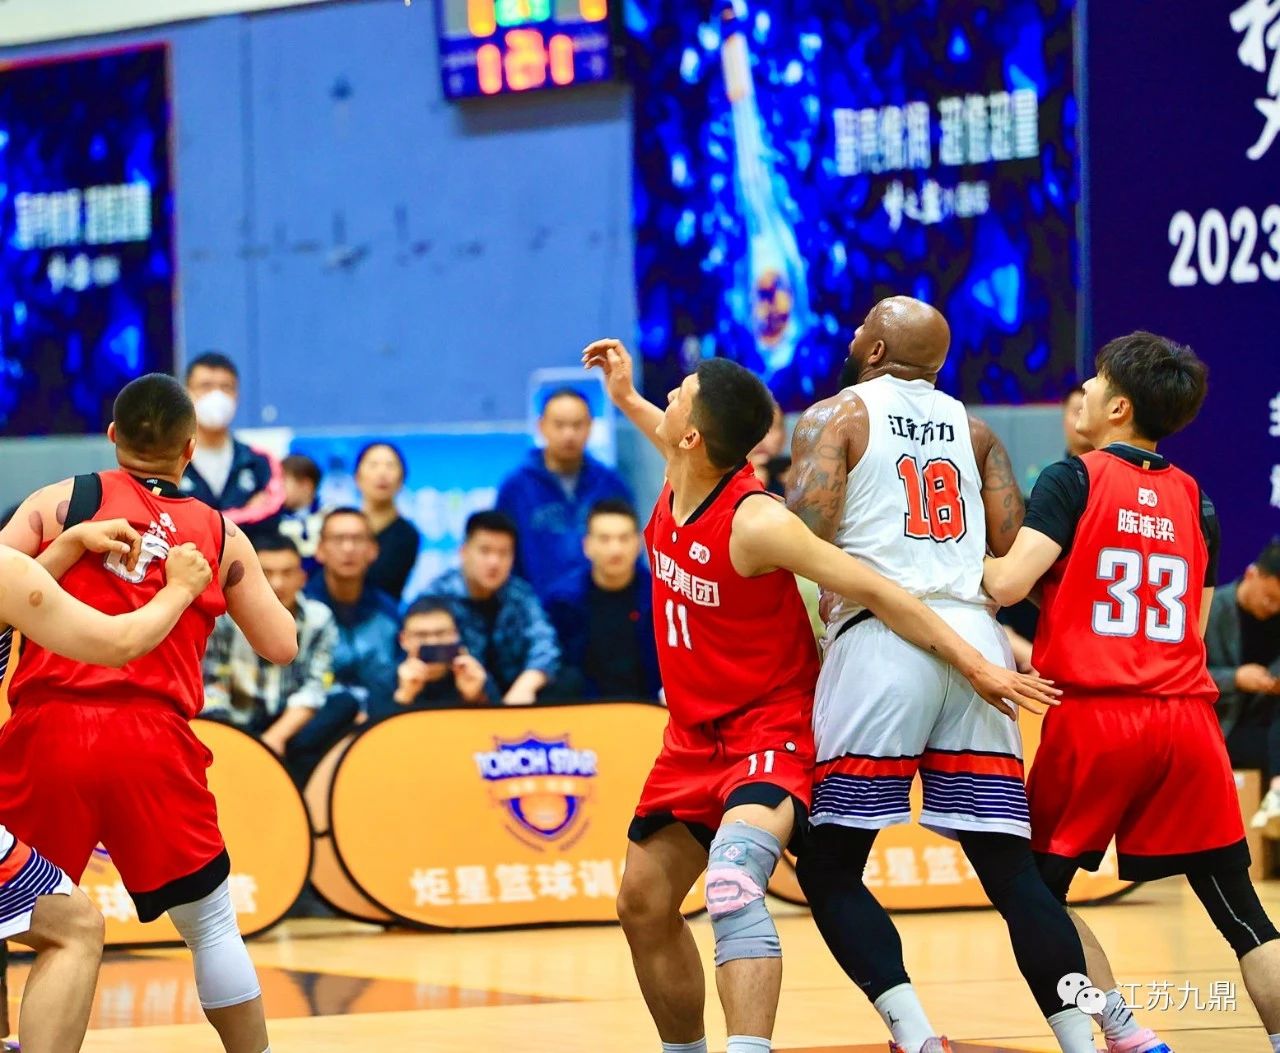 Jiuding Group basketball team won (2)